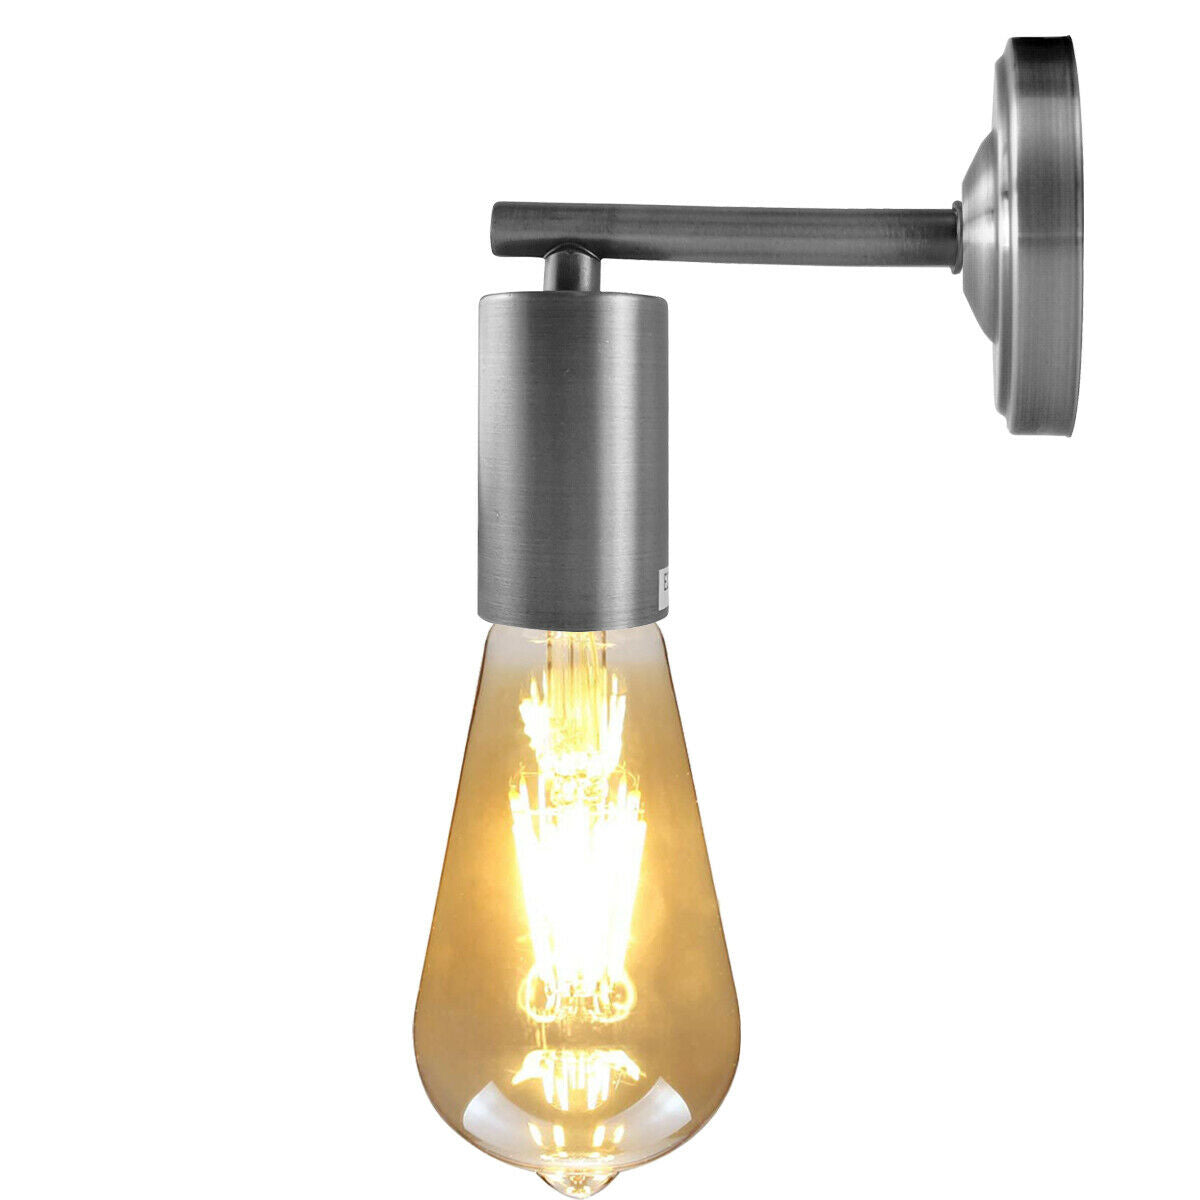 Satin Nickel Industrial Vintage Retro Metallic Sconce Wall Light Lamp Fitting~1692 - LEDSone UK Ltd